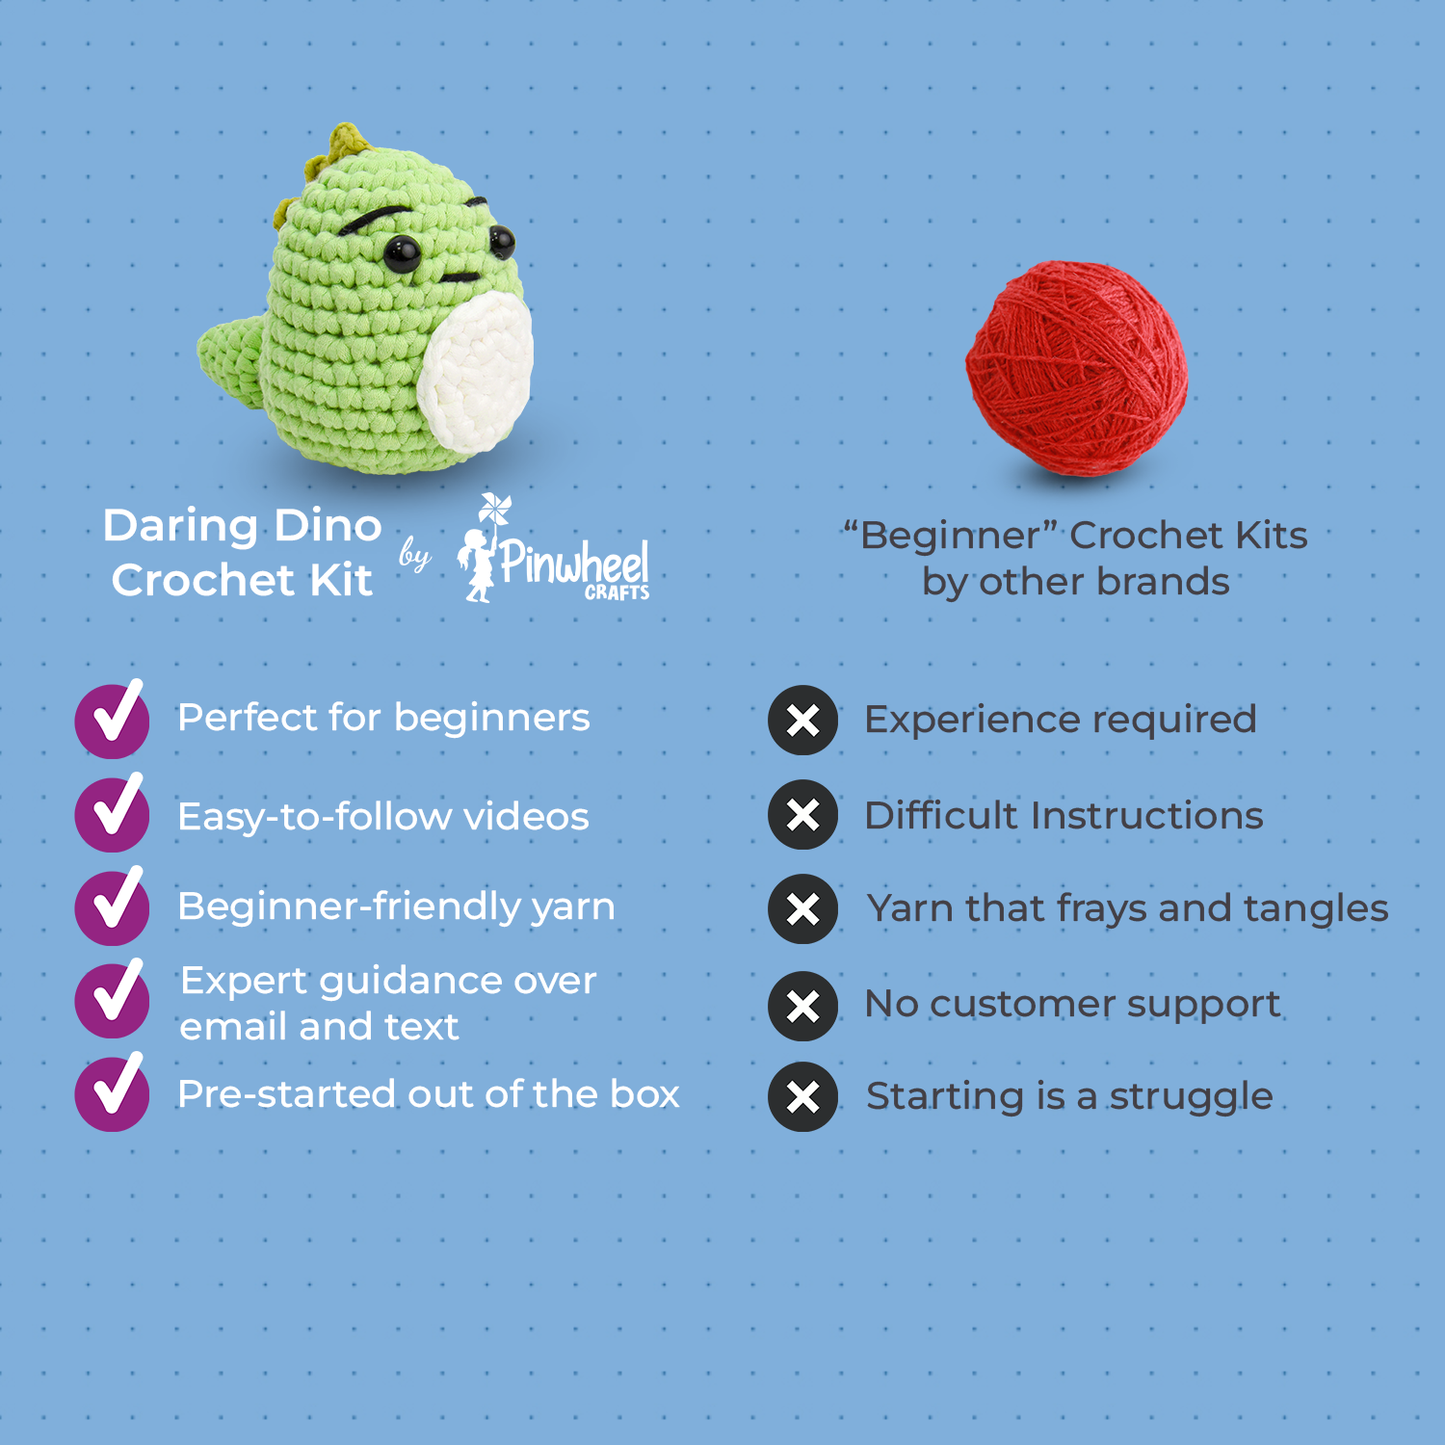 Daring Dino Crochet Kit